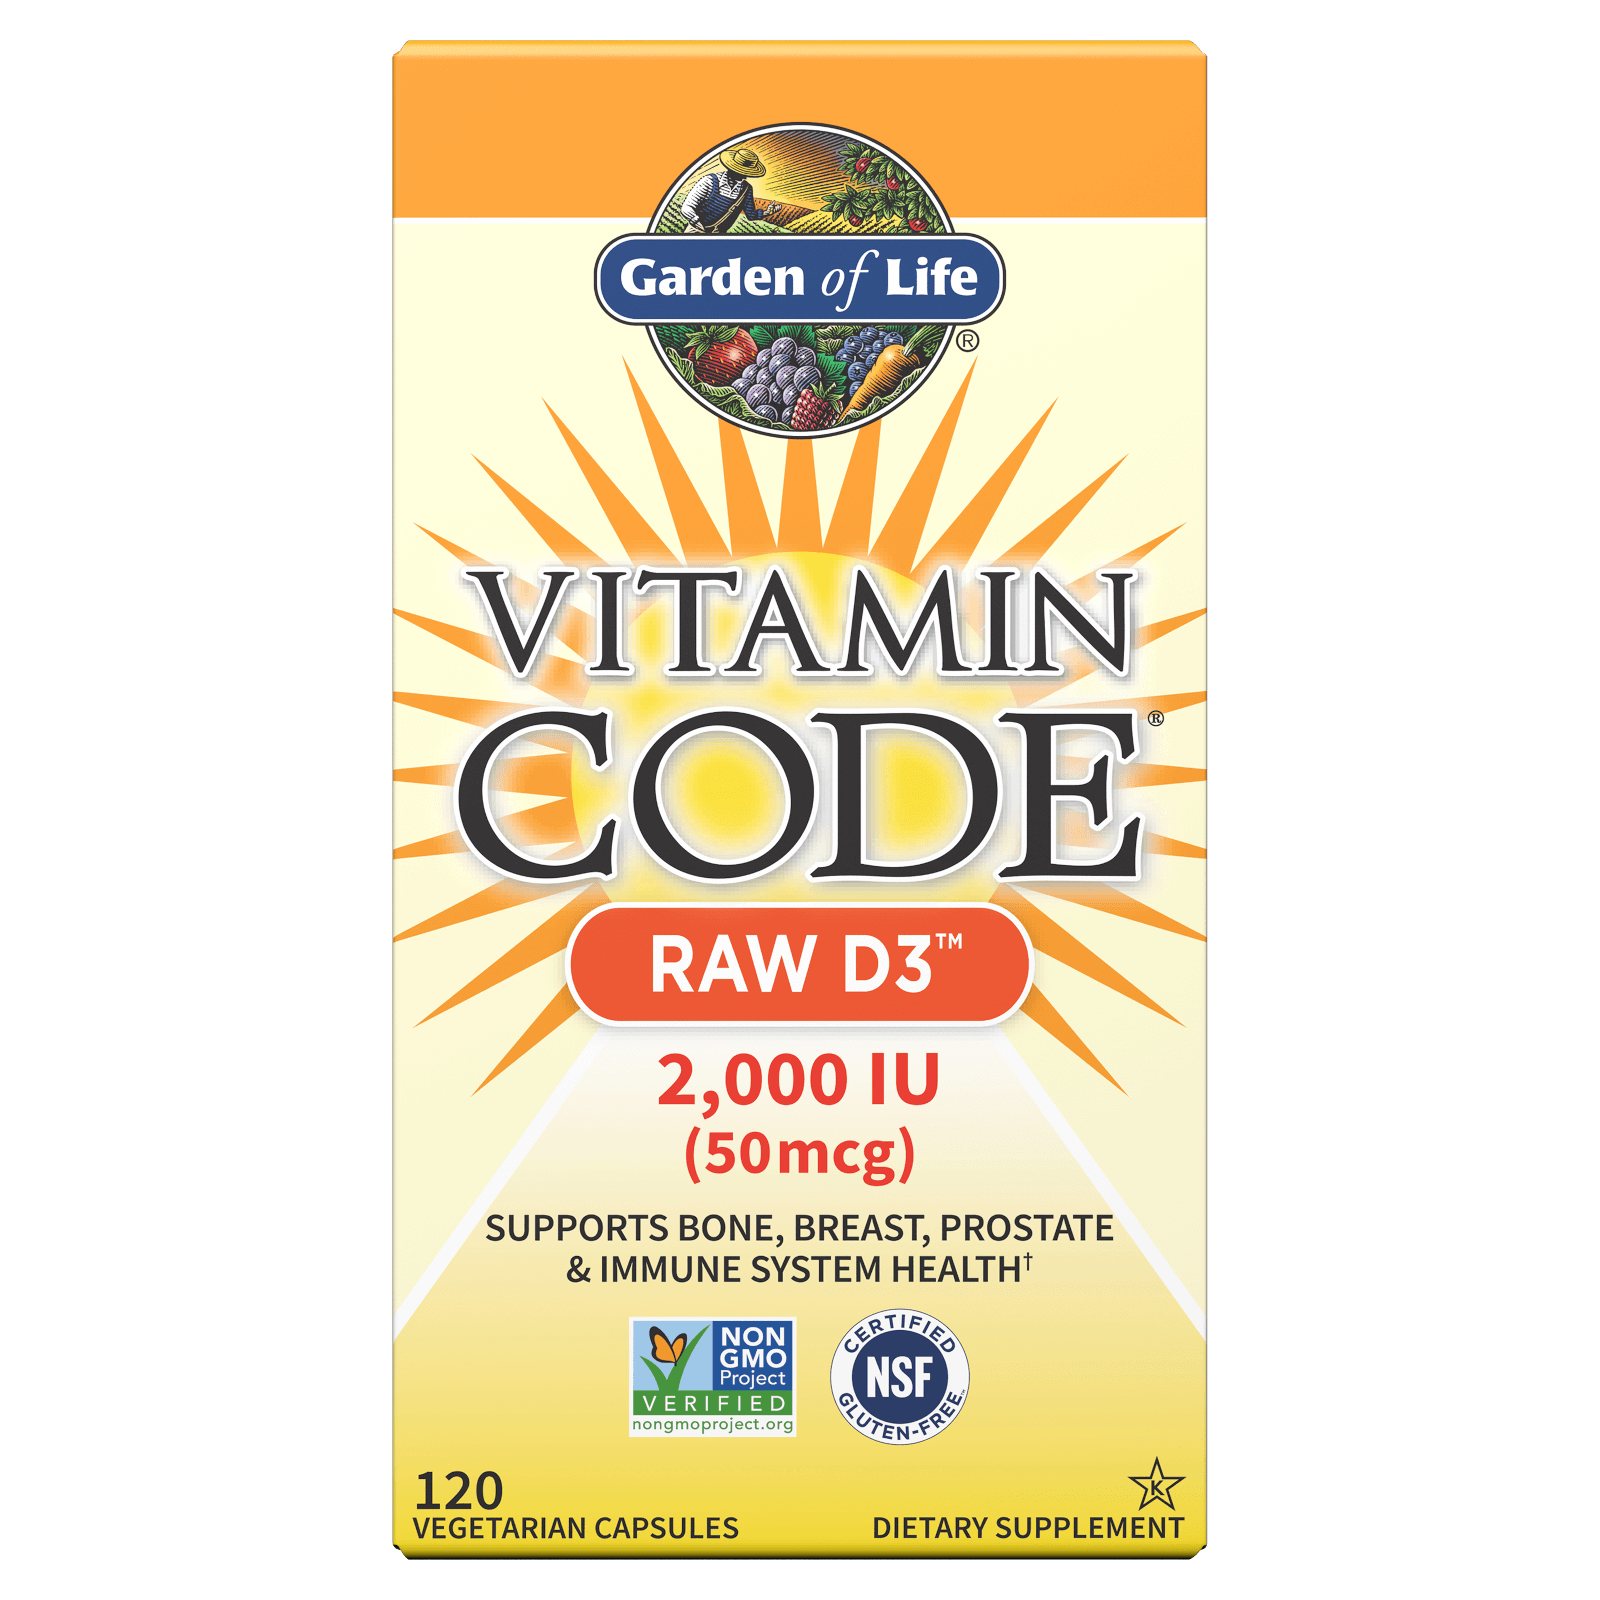 Garden of Life Vitamin Code Raw D3 2000 LU 120ct Capsules